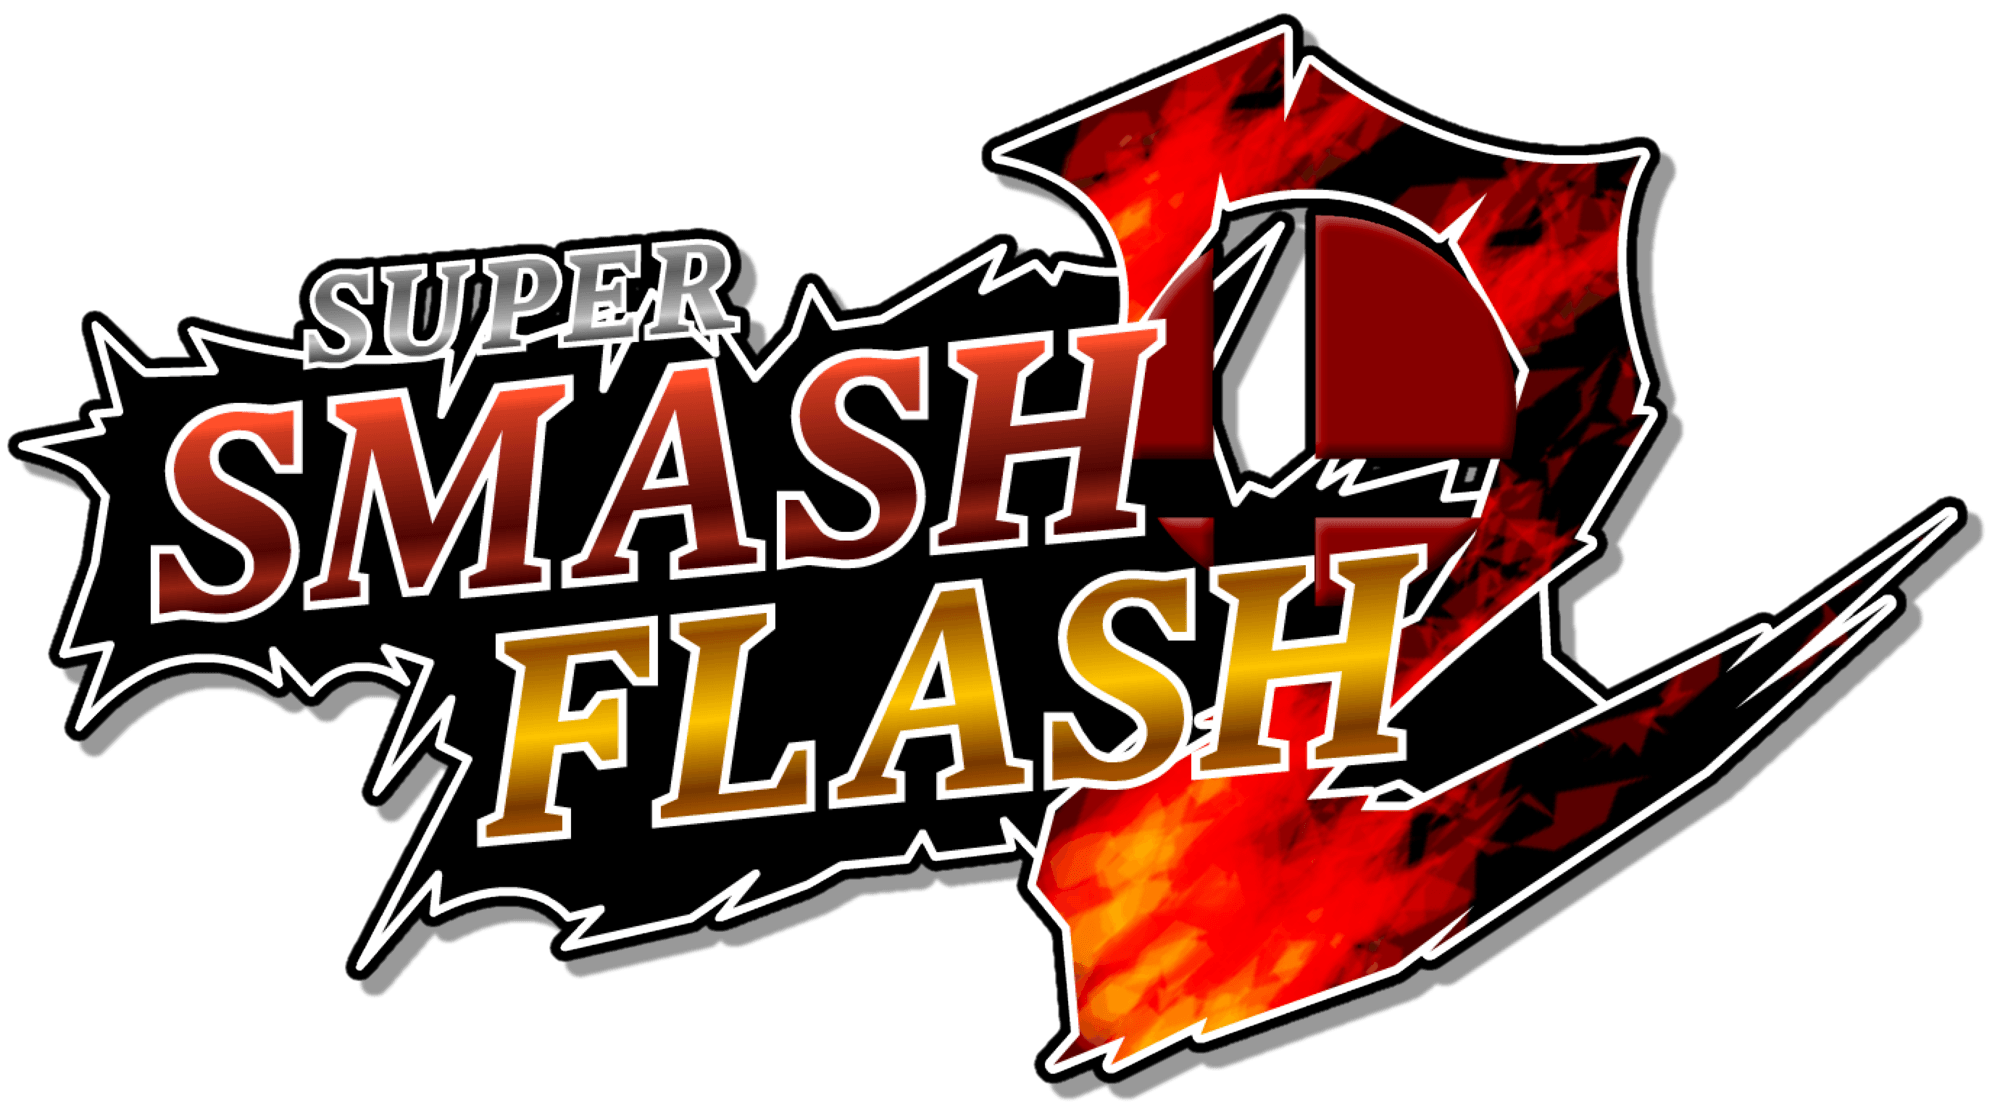 Epic Super Smash Bros Logo - Super Smash Flash 2 | McLeodGaming Wiki | FANDOM powered by Wikia